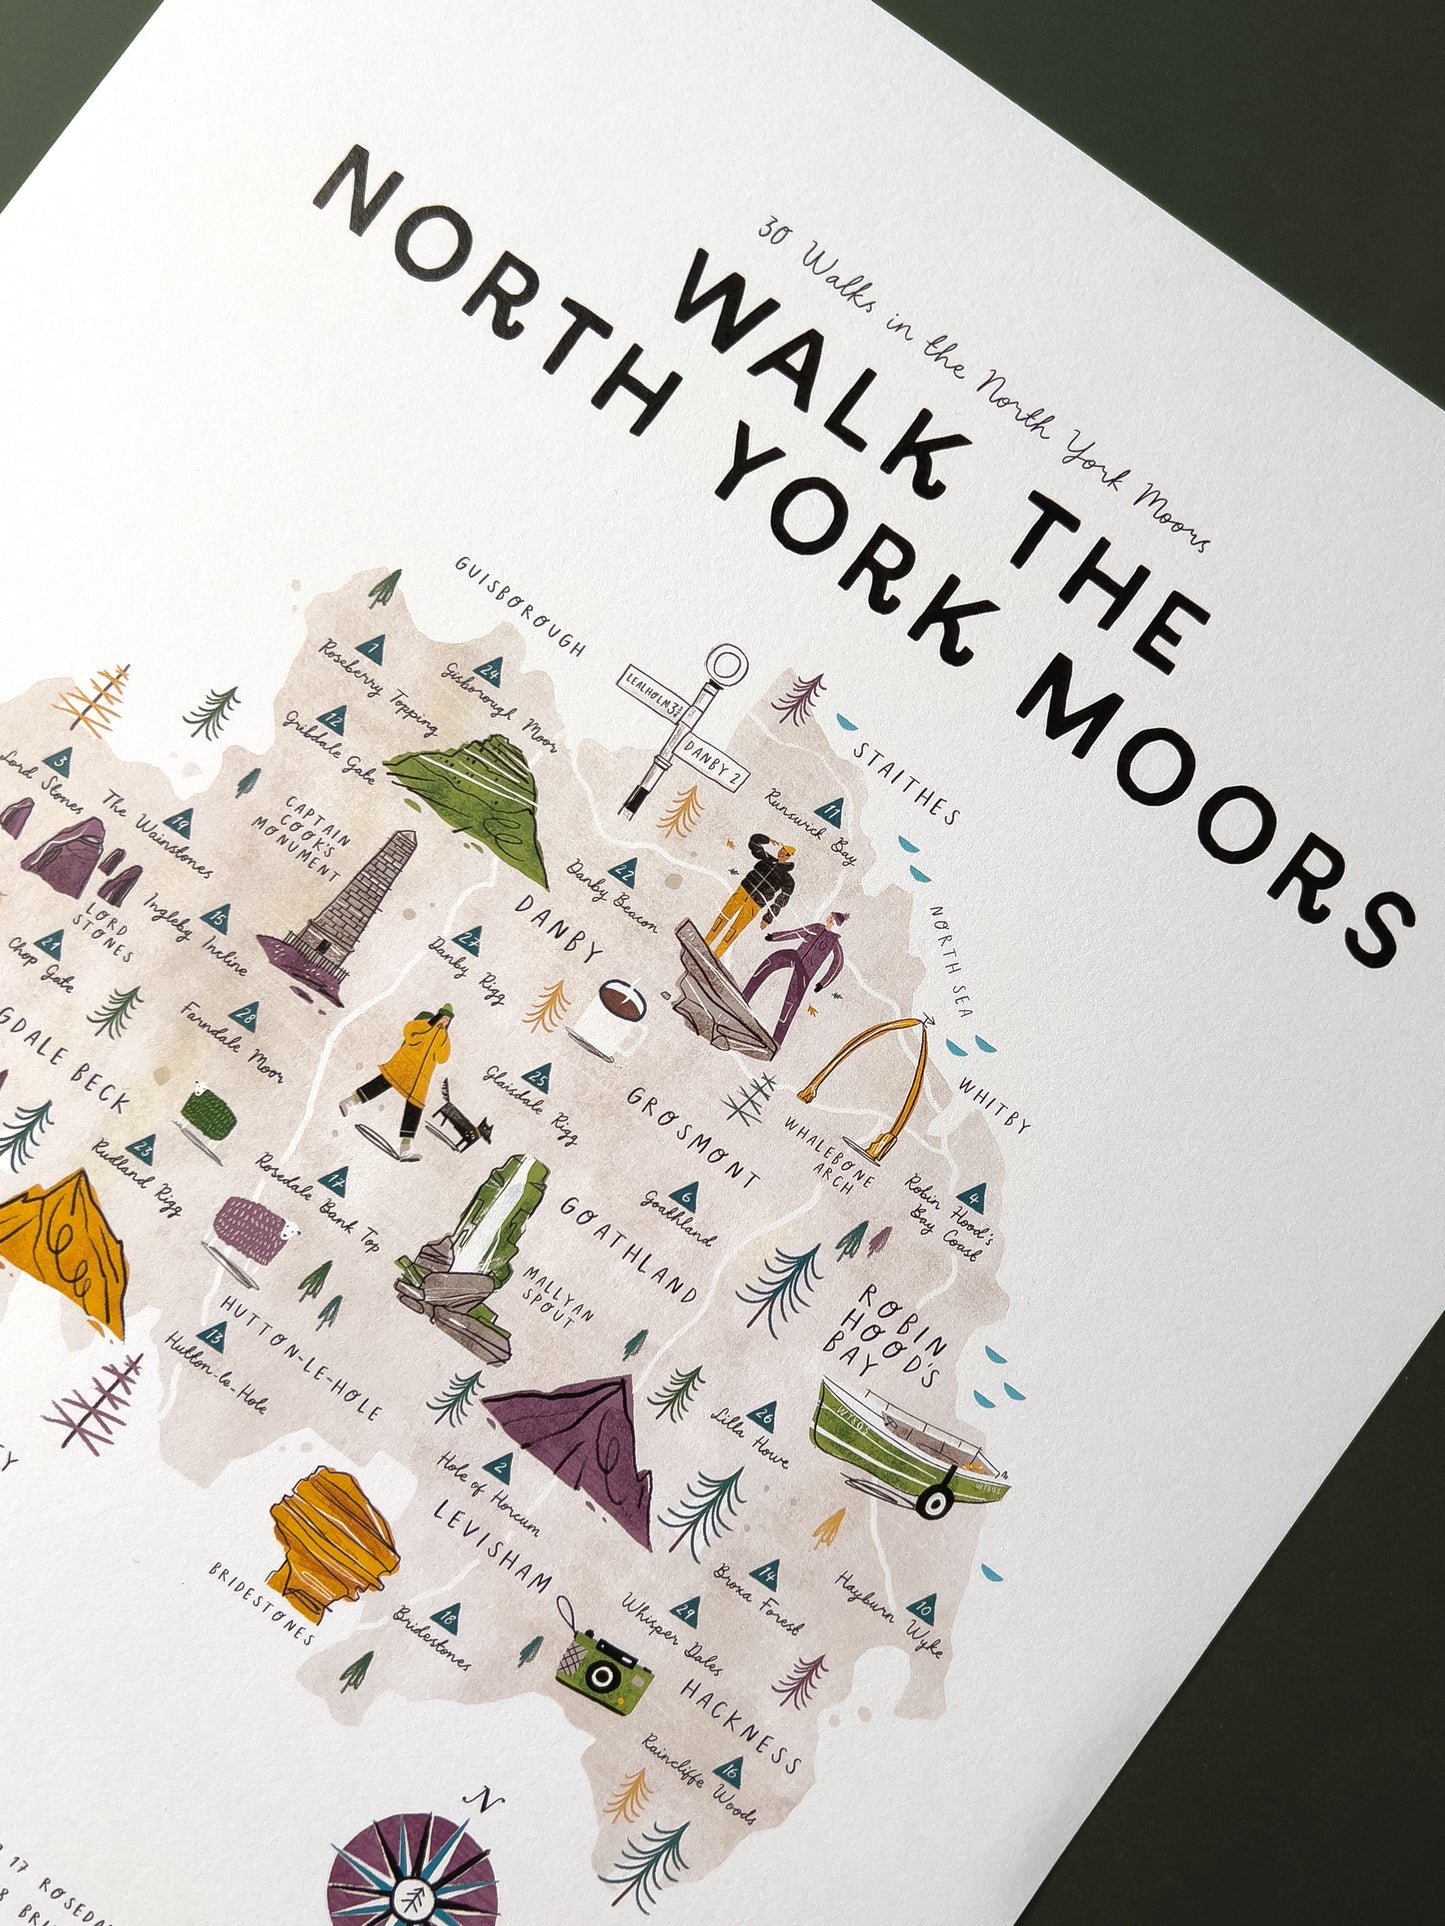 Walk the North York Moors A3 Map Checklist